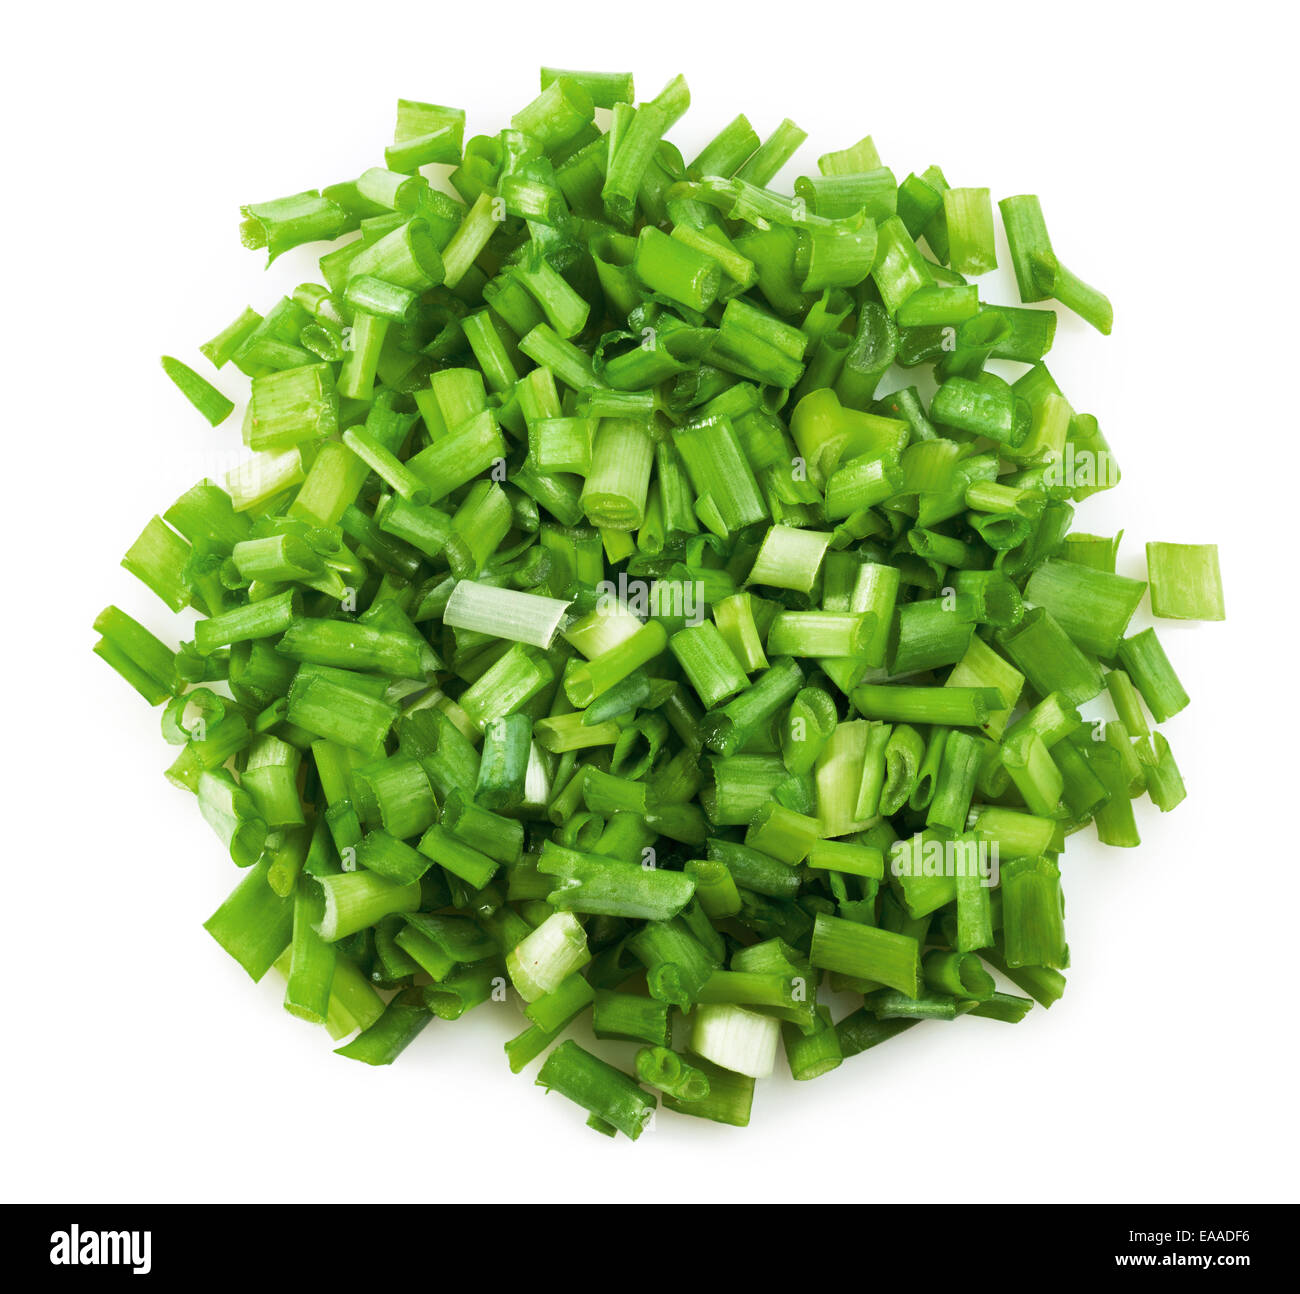 https://c8.alamy.com/comp/EAADF6/fresh-chopped-green-onions-on-a-white-background-EAADF6.jpg